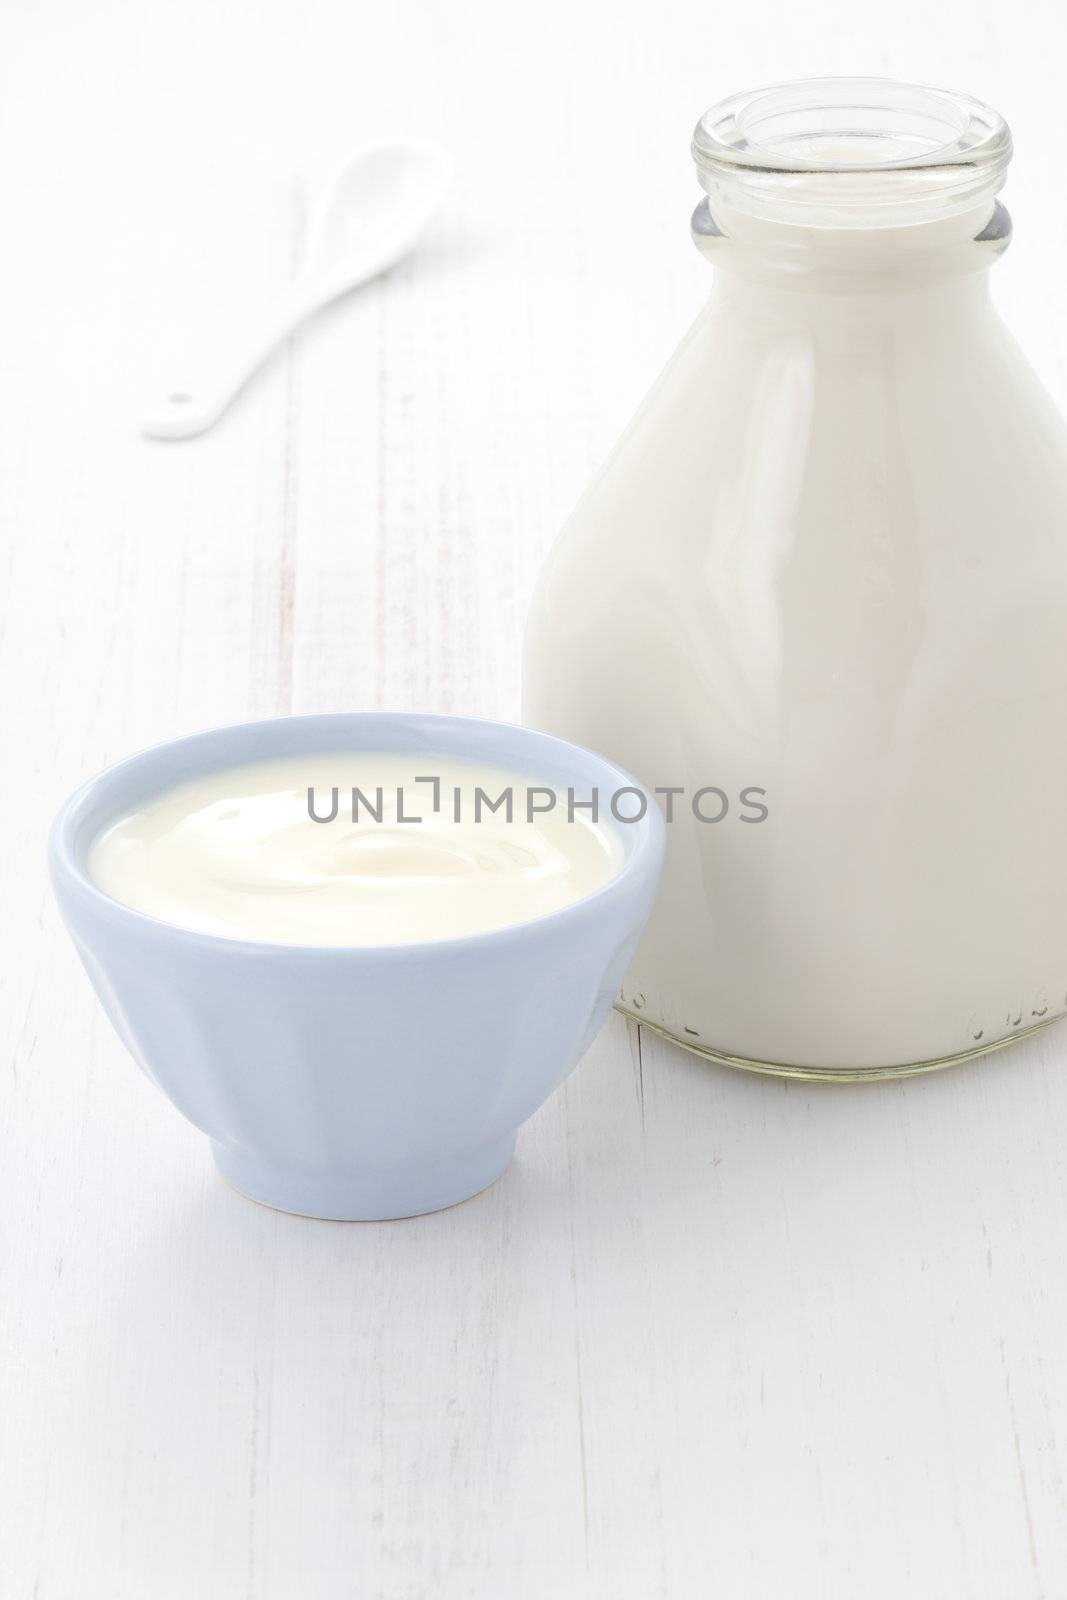 Delicious, nutritious and fresh plain yogurt and milk bottle.